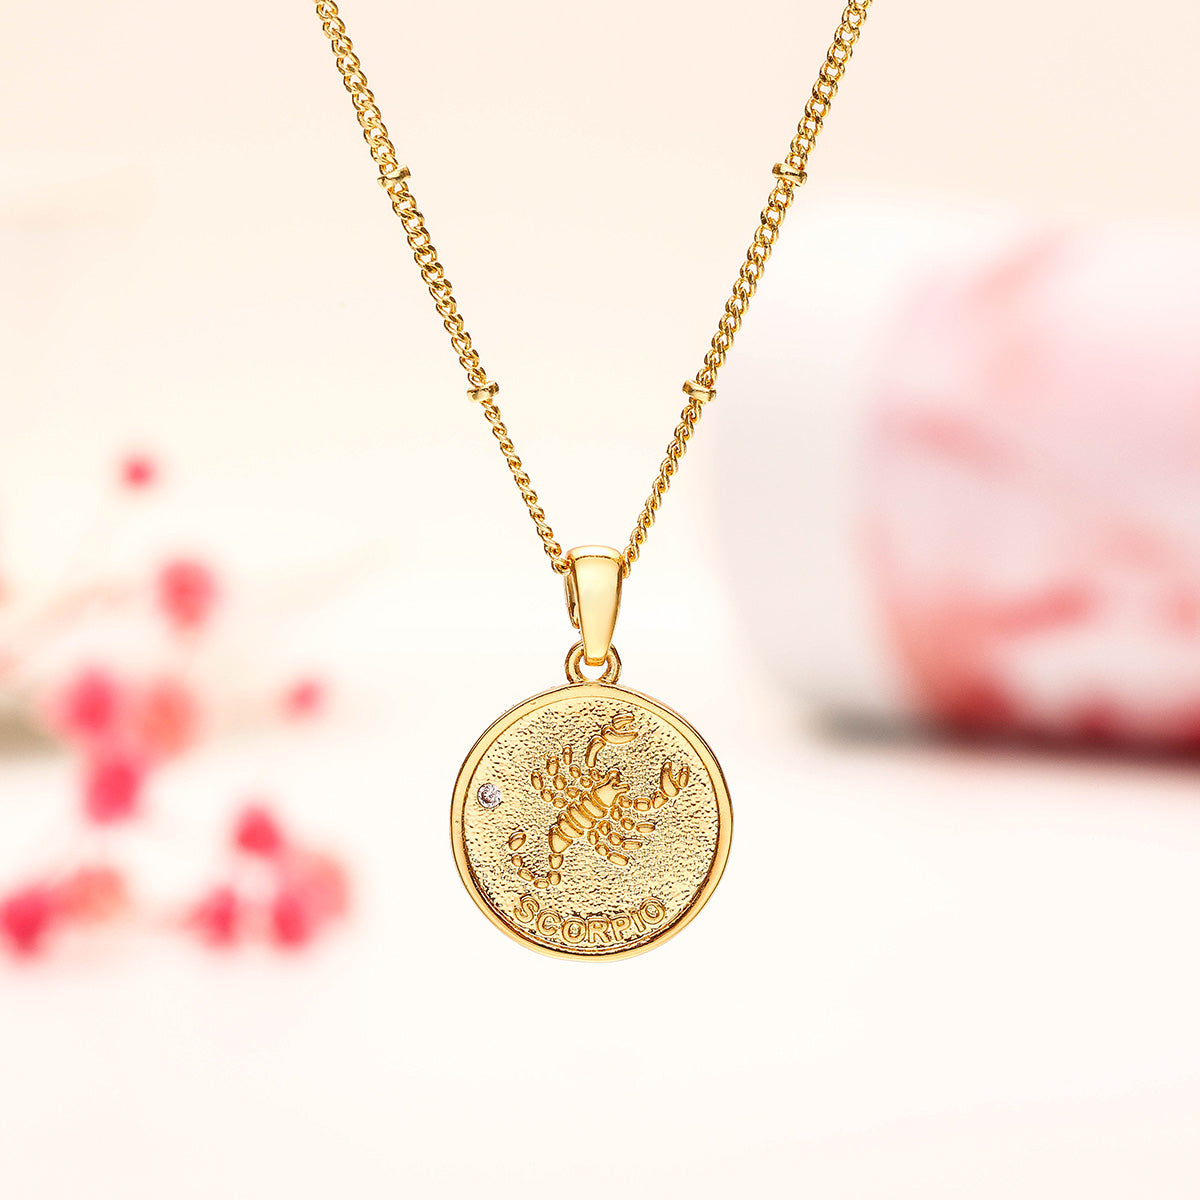 Scorpio Constellation Coin Pendant Statement Necklace